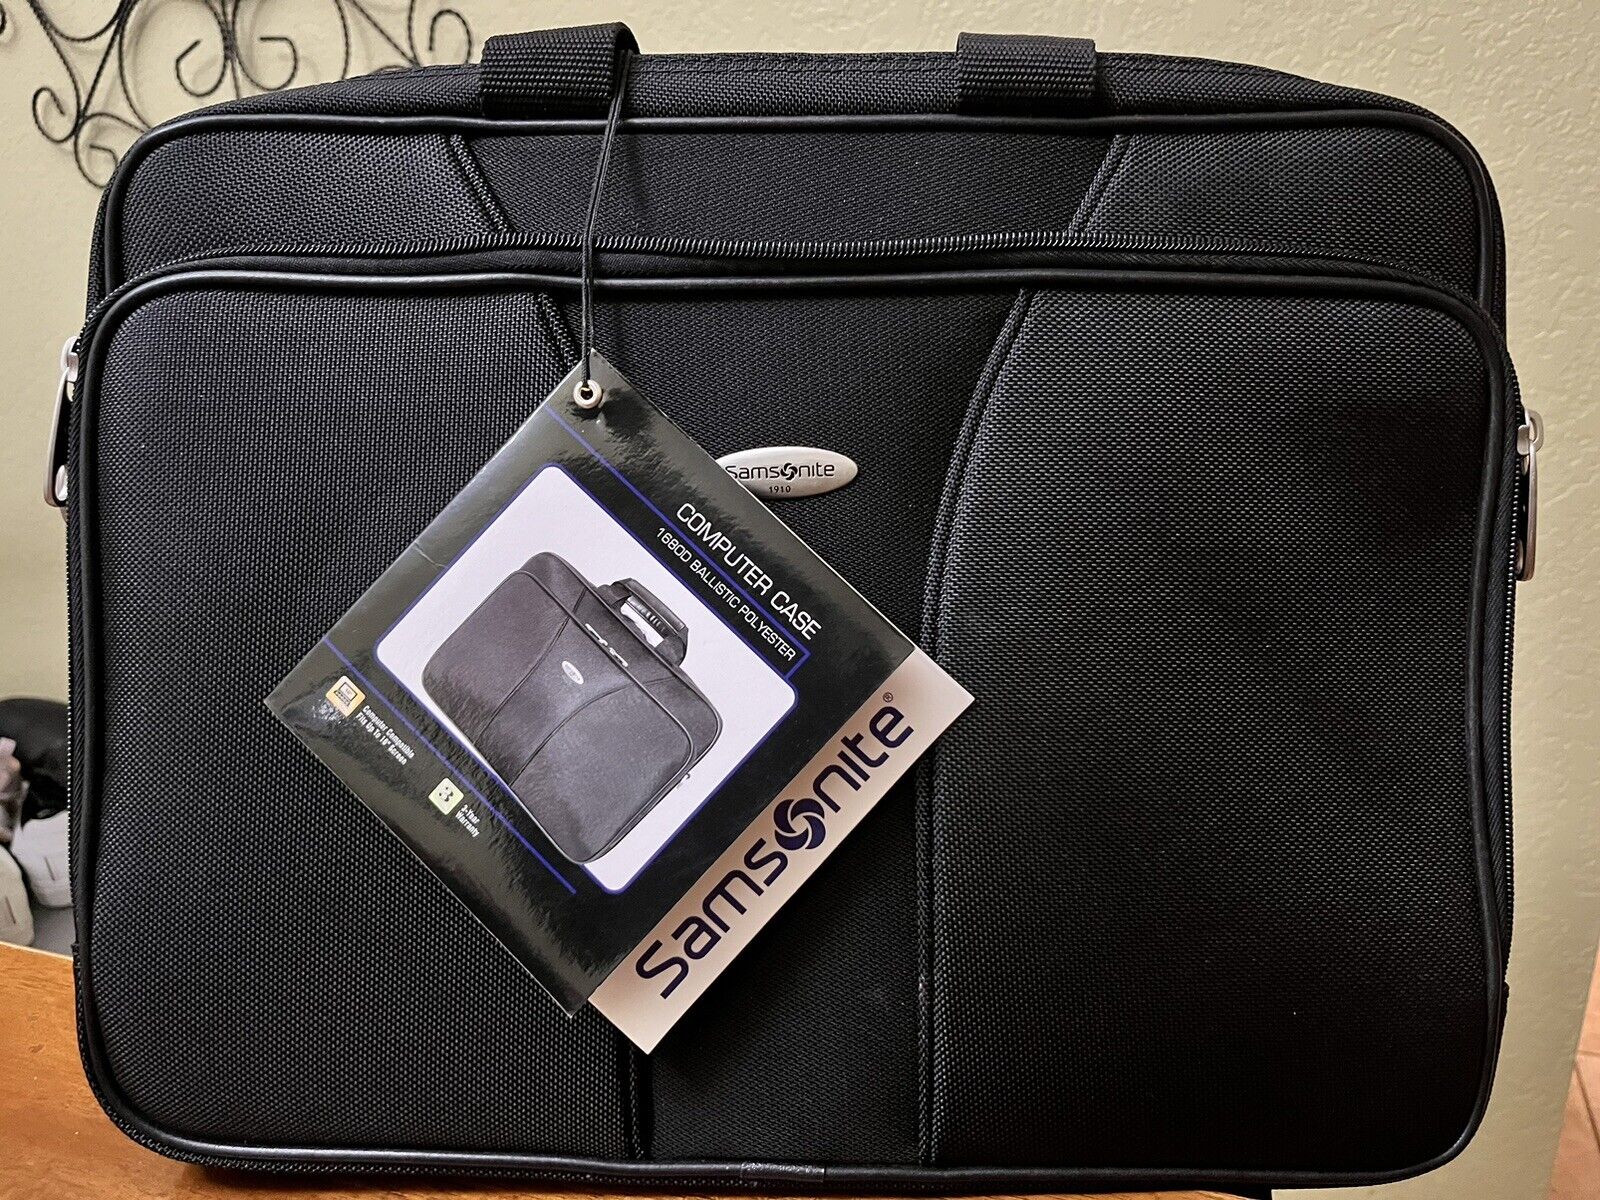 SAMSONITE NEW Black Briefcase, Laptop Computer Bag Case Luggage